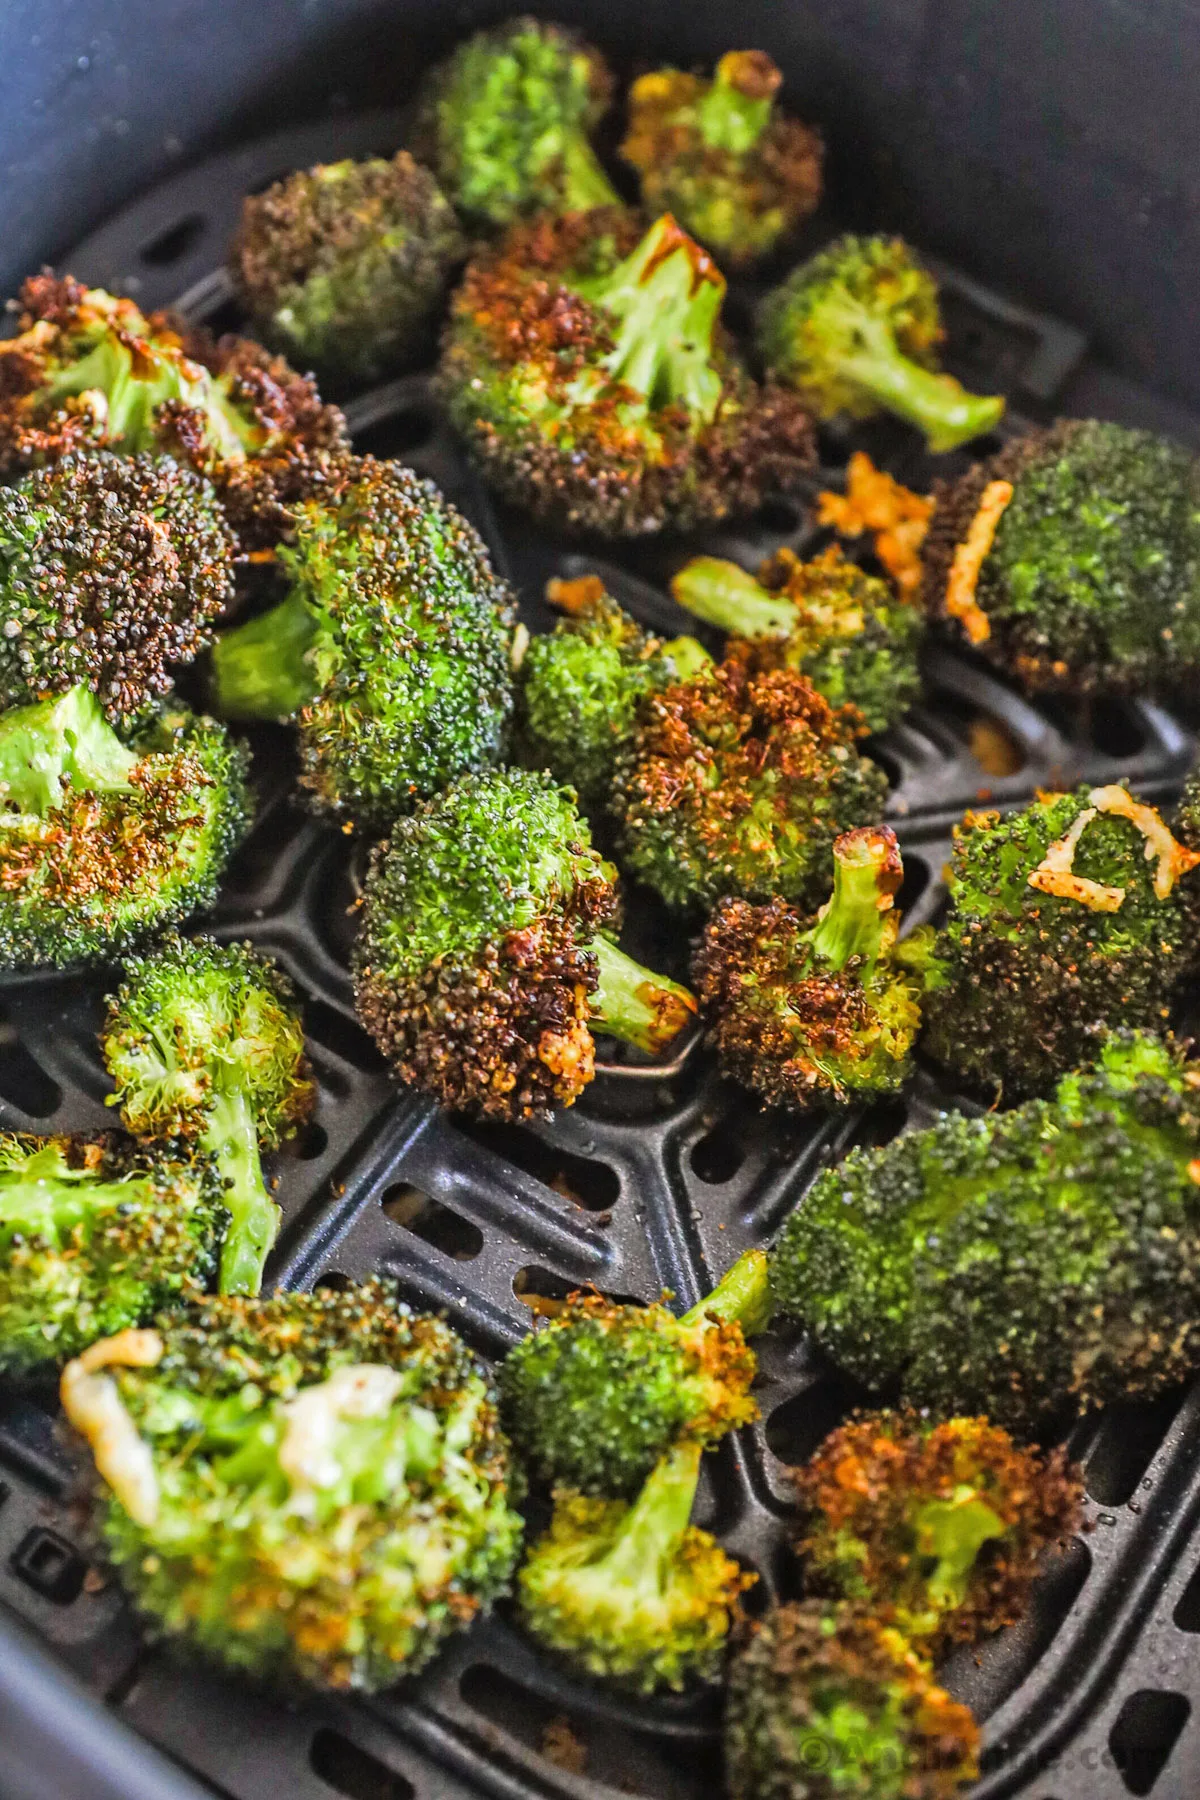 Crispy broccoli florets in an air fryer basket.